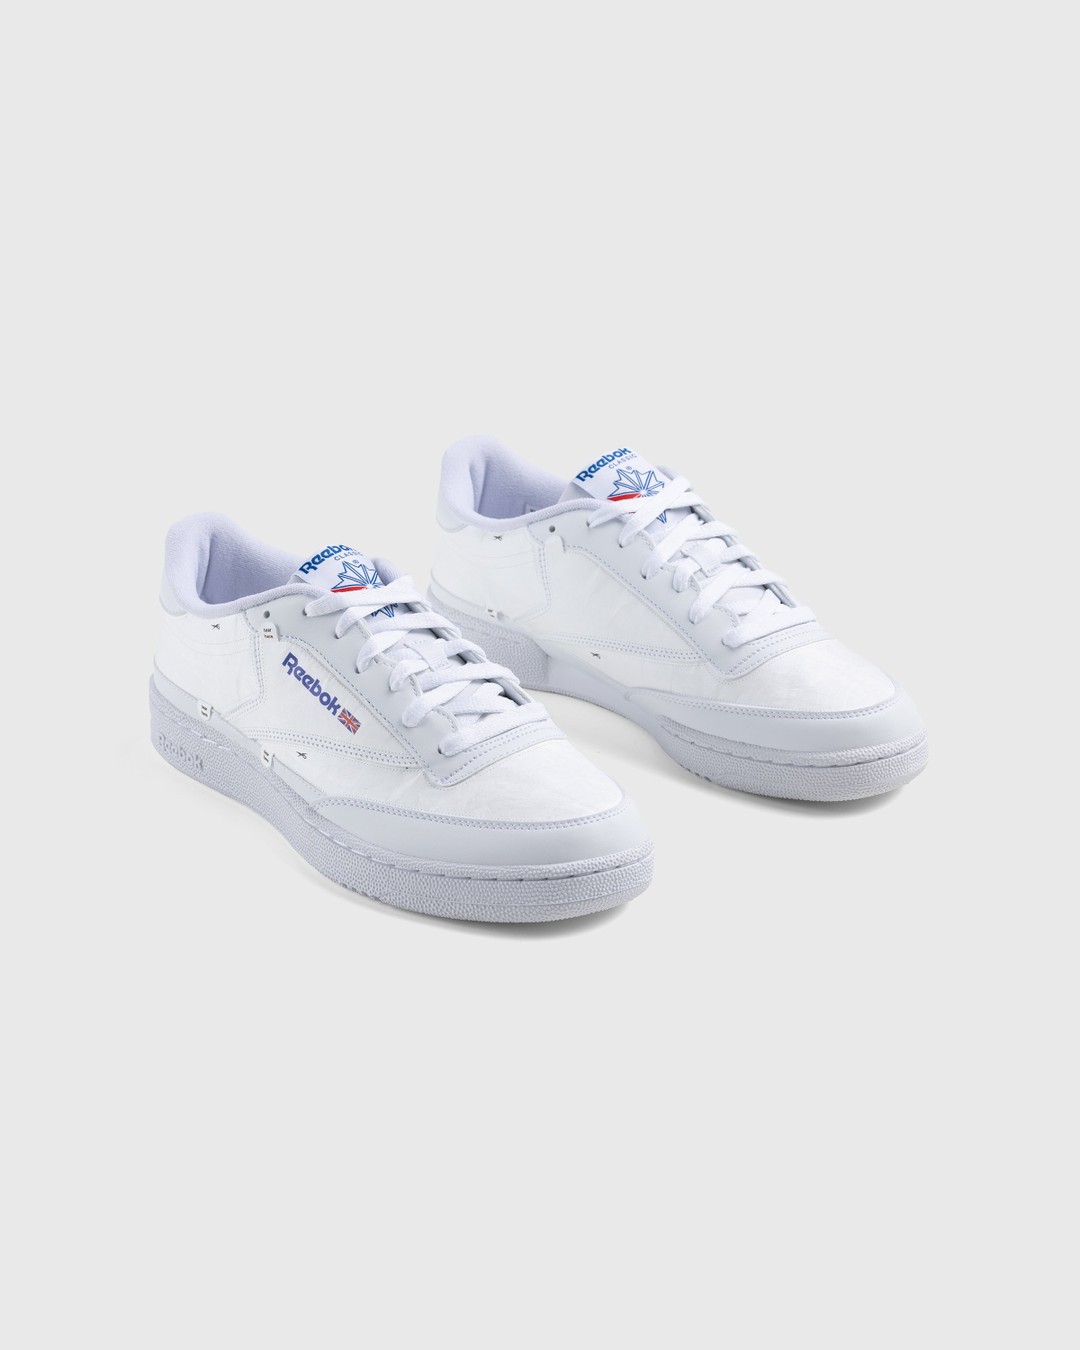 Reebok – Club C 85 x U White - Low Top Sneakers - White - Image 2